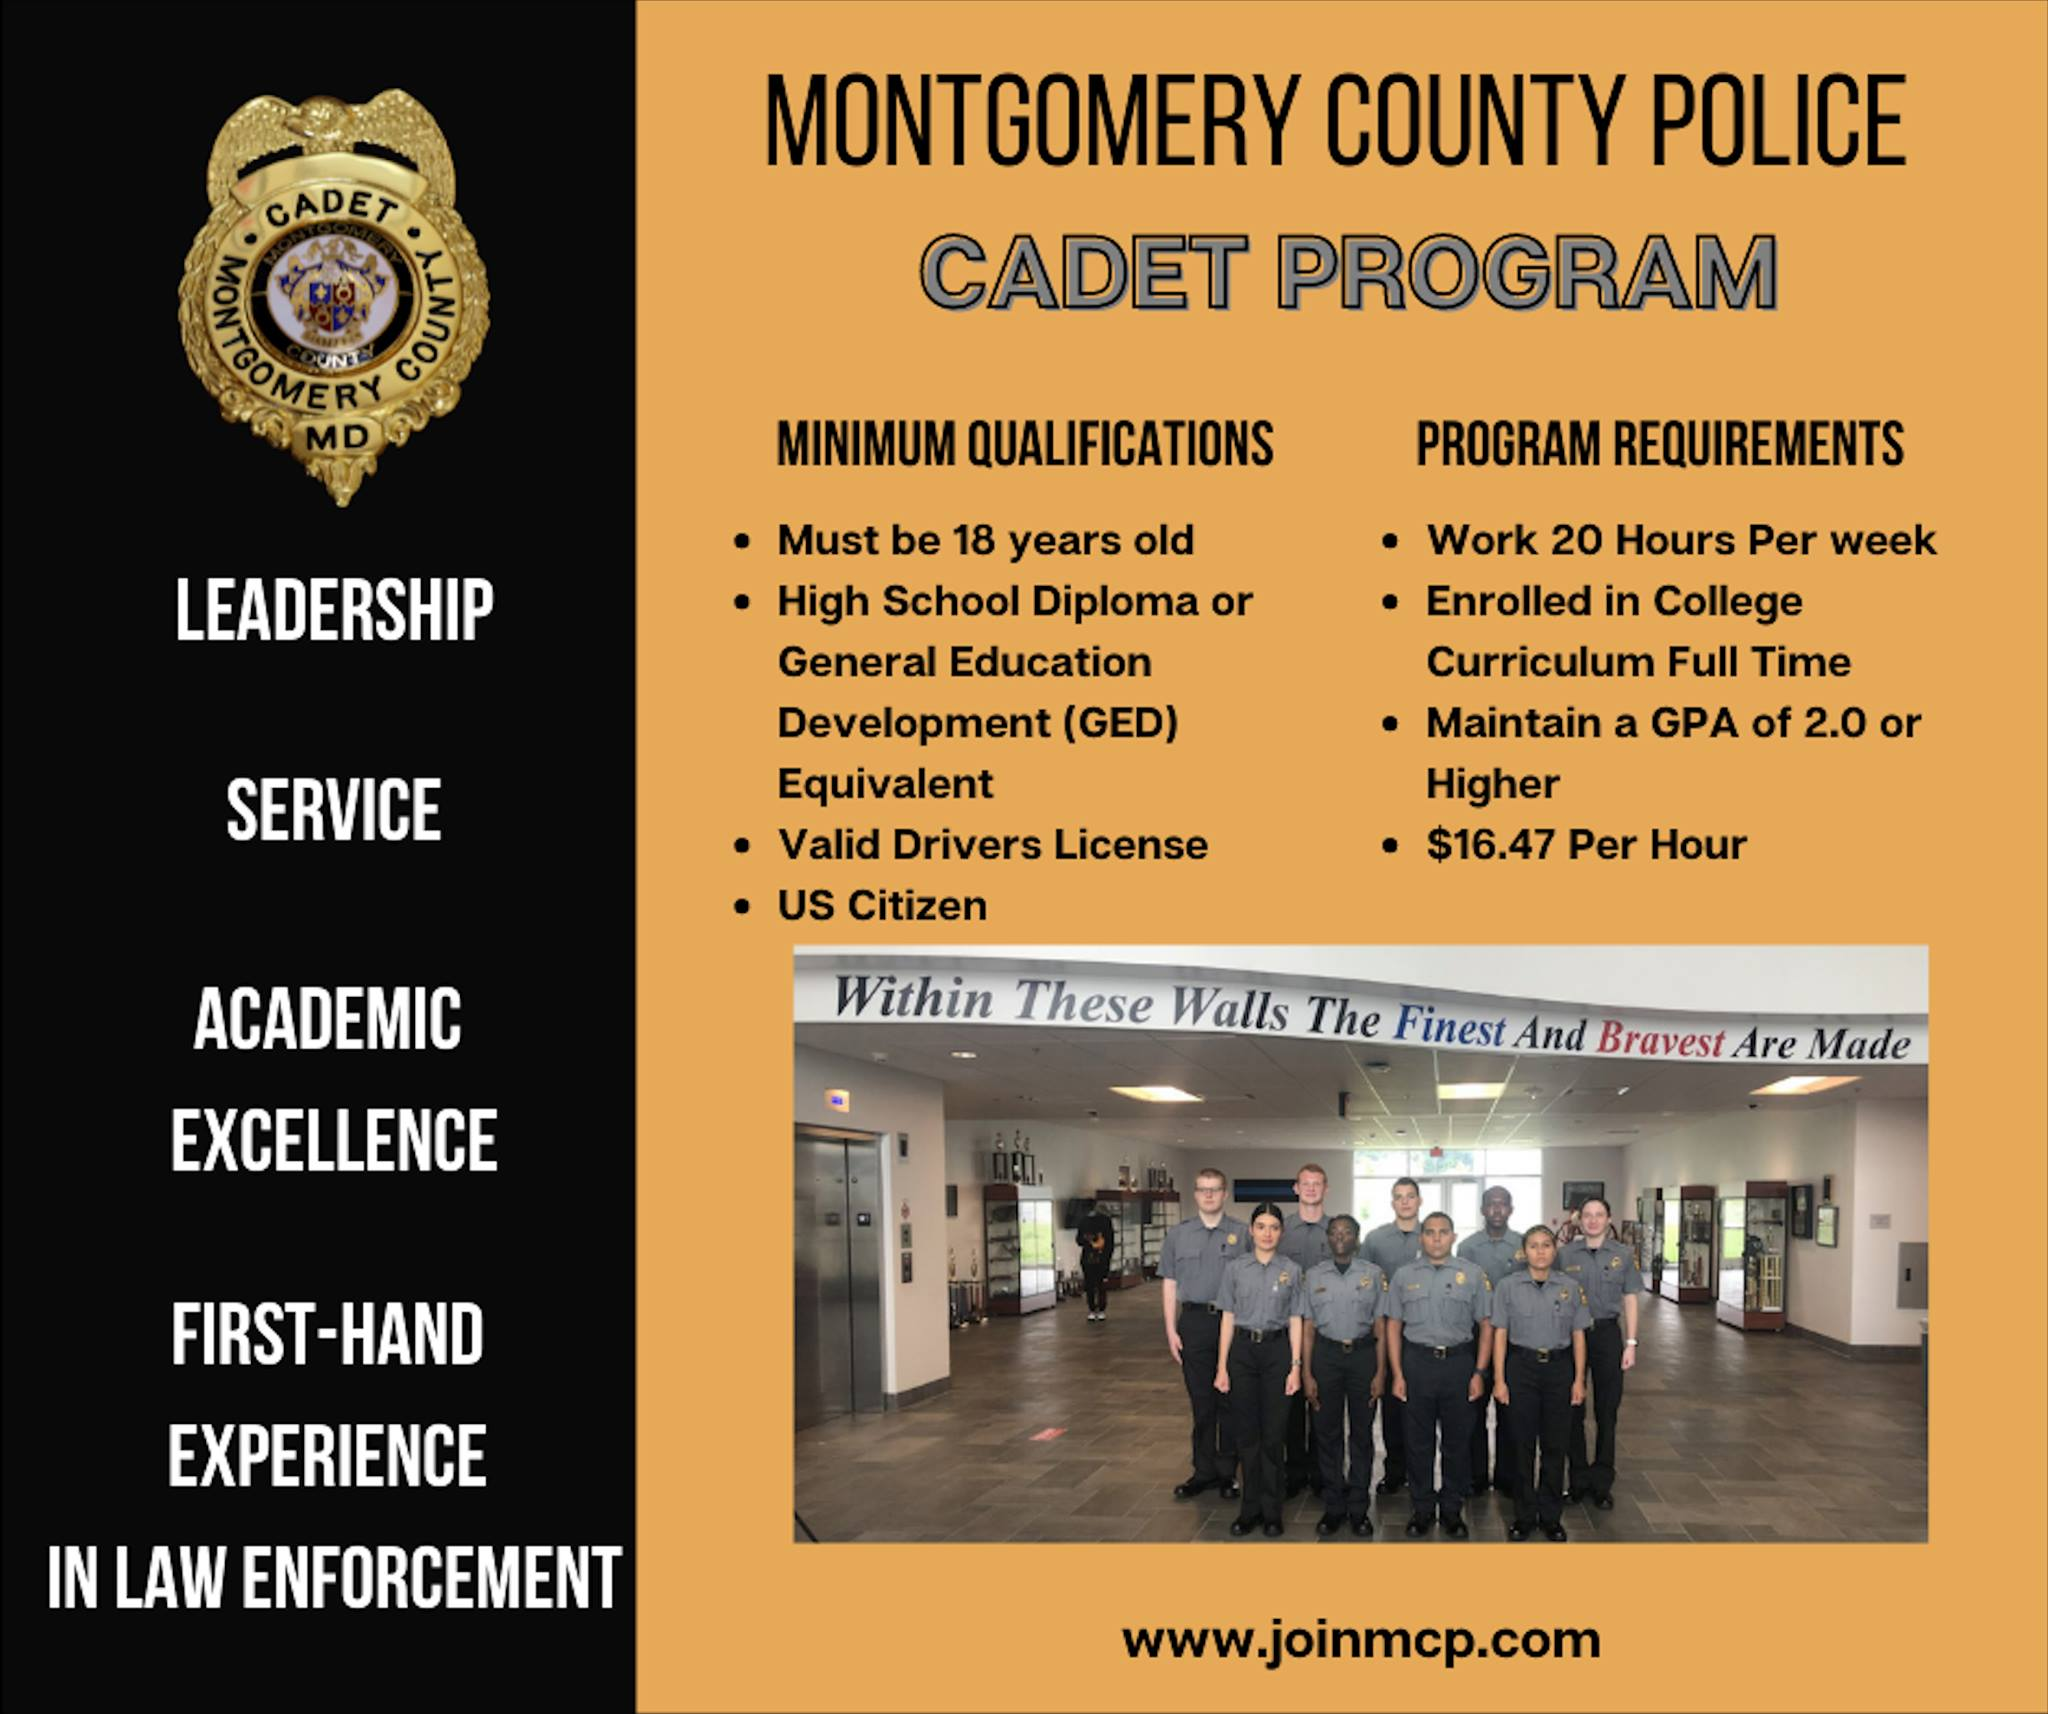 CCJS@USG News and Updates: Montgomery County Police Cadet Program